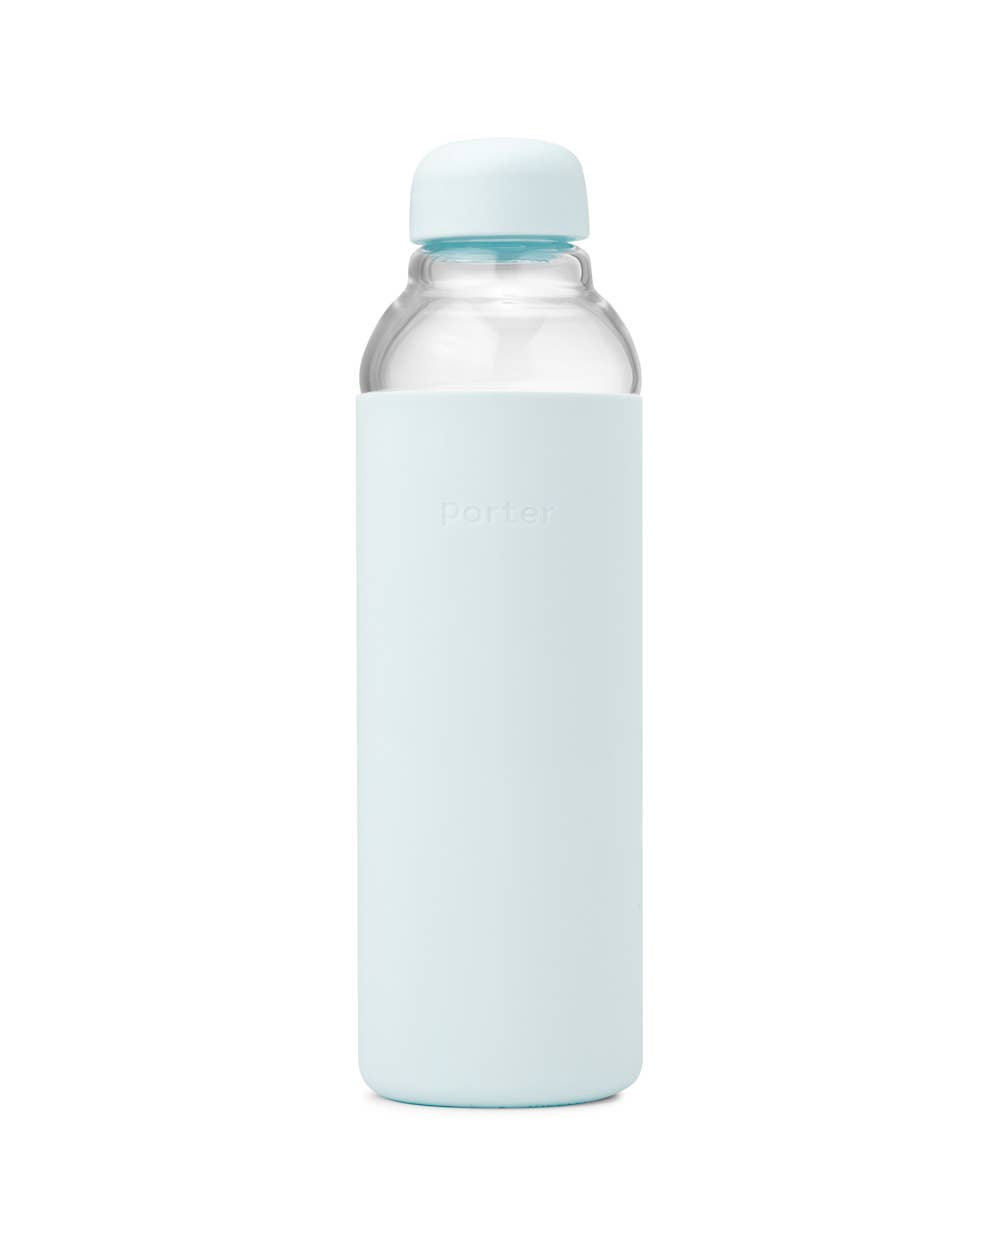 Glass Water Bottle: Blush